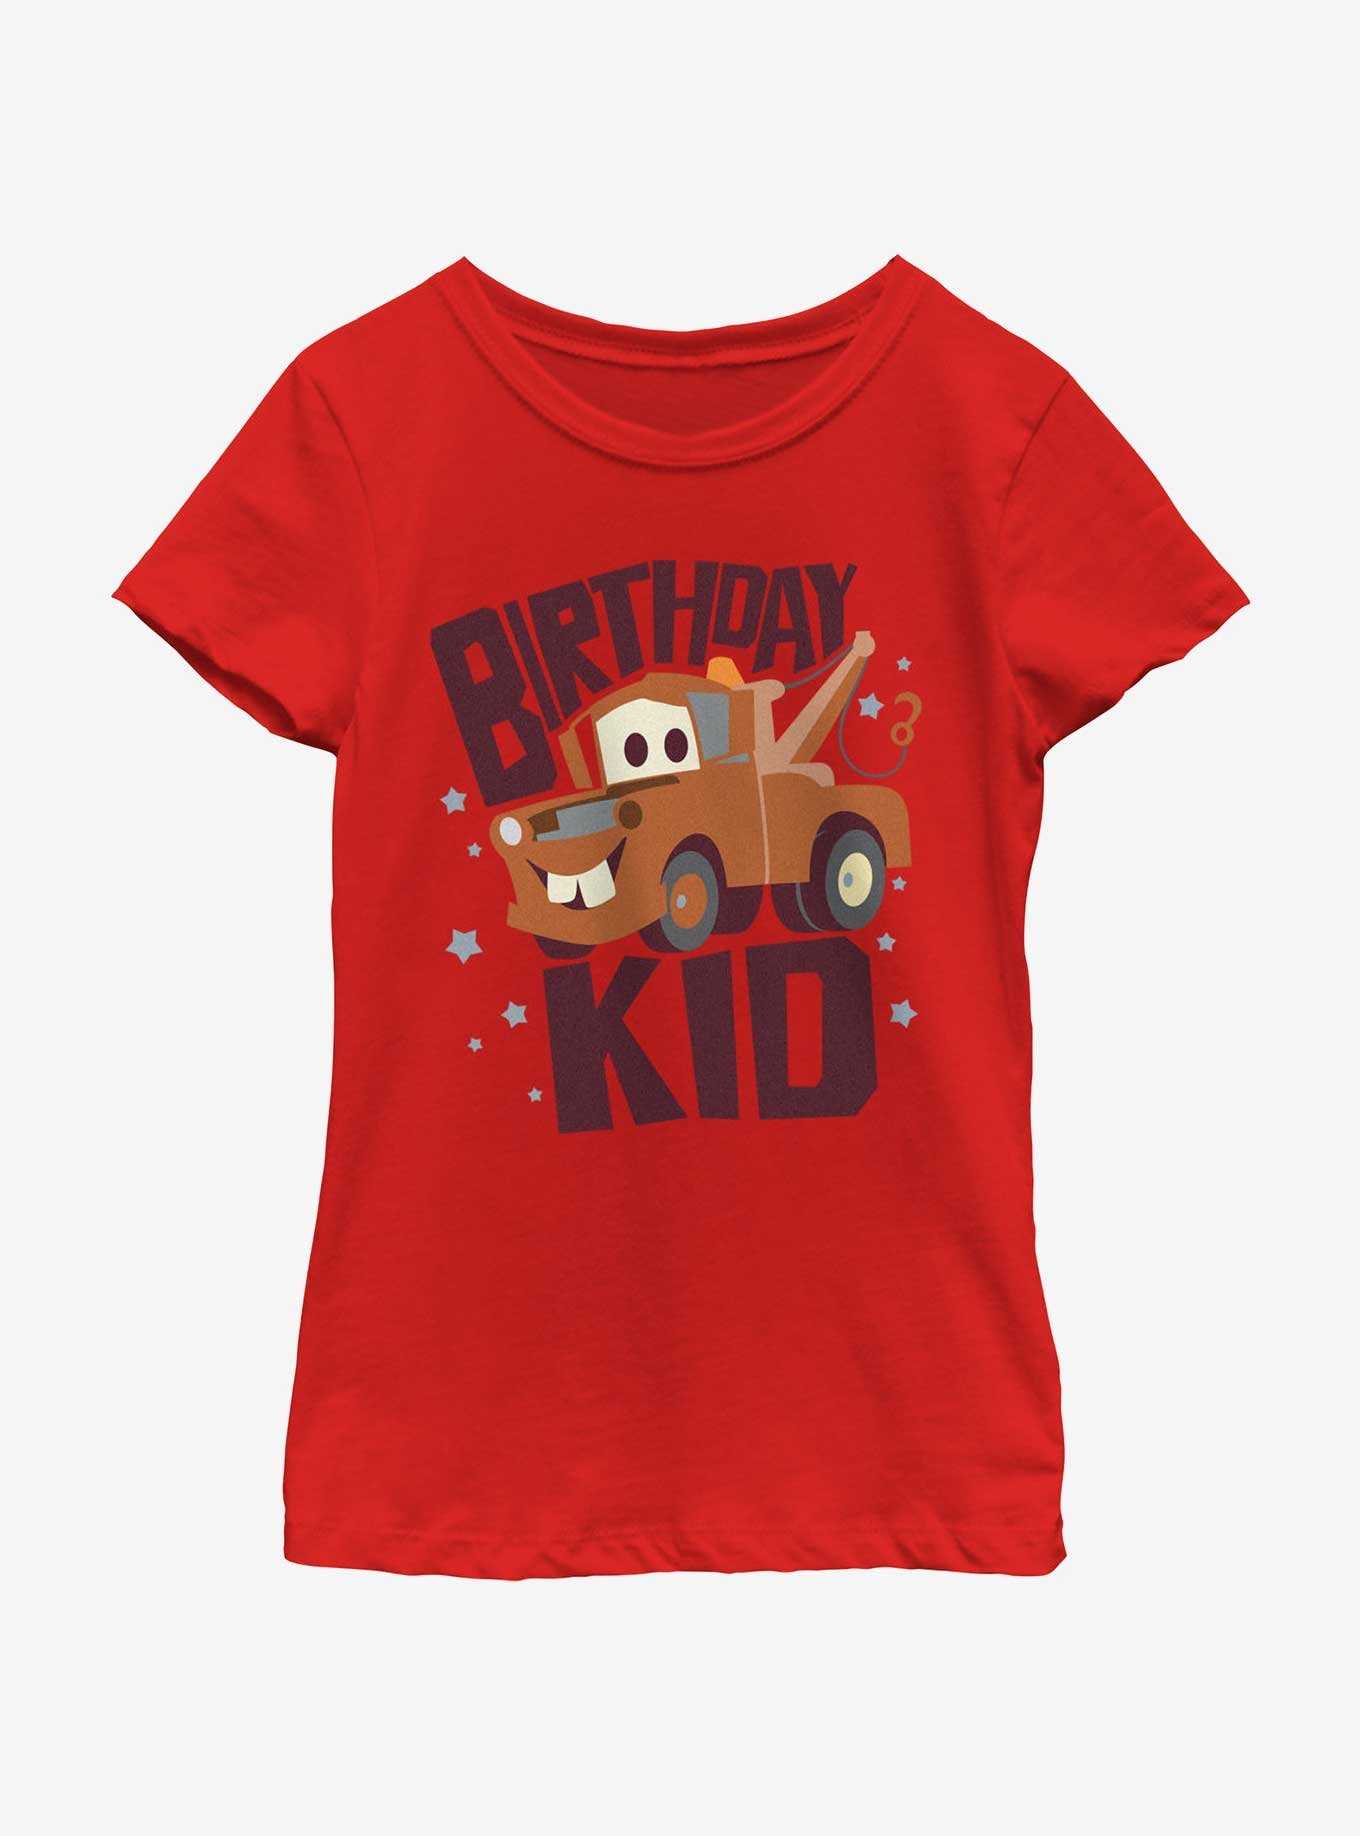 Disney Pixar Cars Mater Birthday Kid Youth Girls T-Shirt, , hi-res